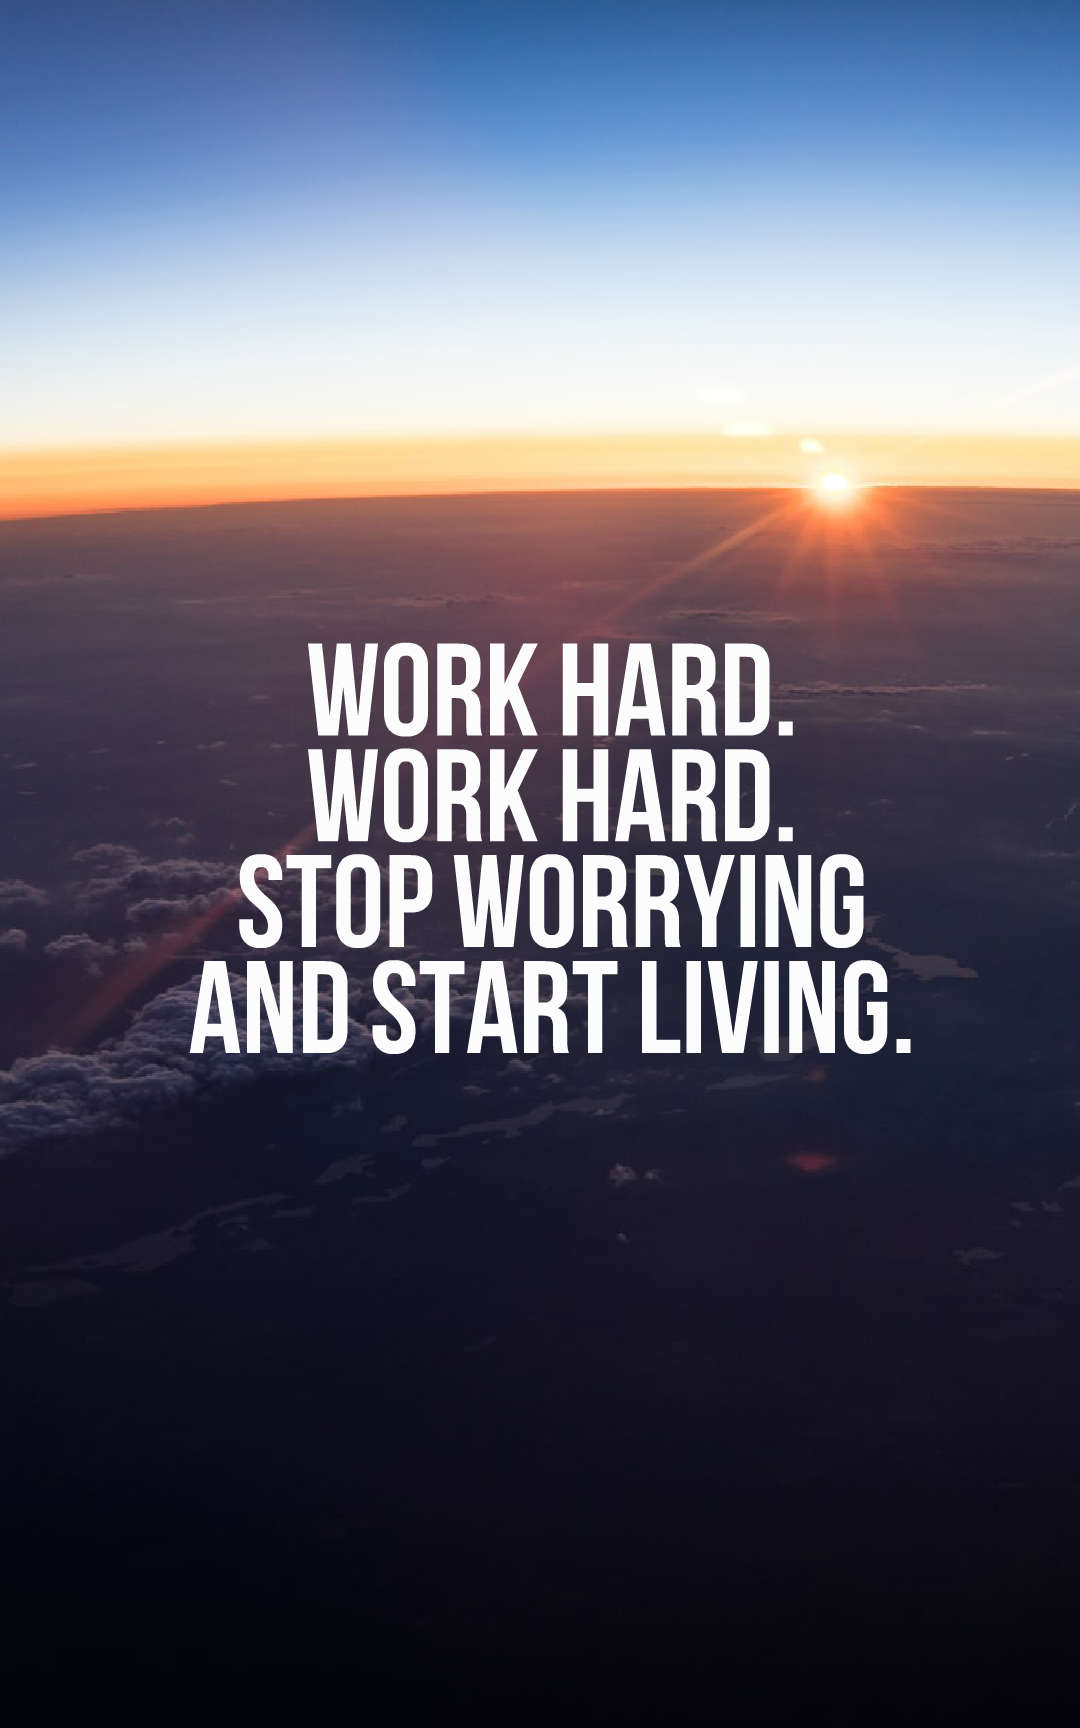 Work hard. Work hard. Stop worrying and start living.